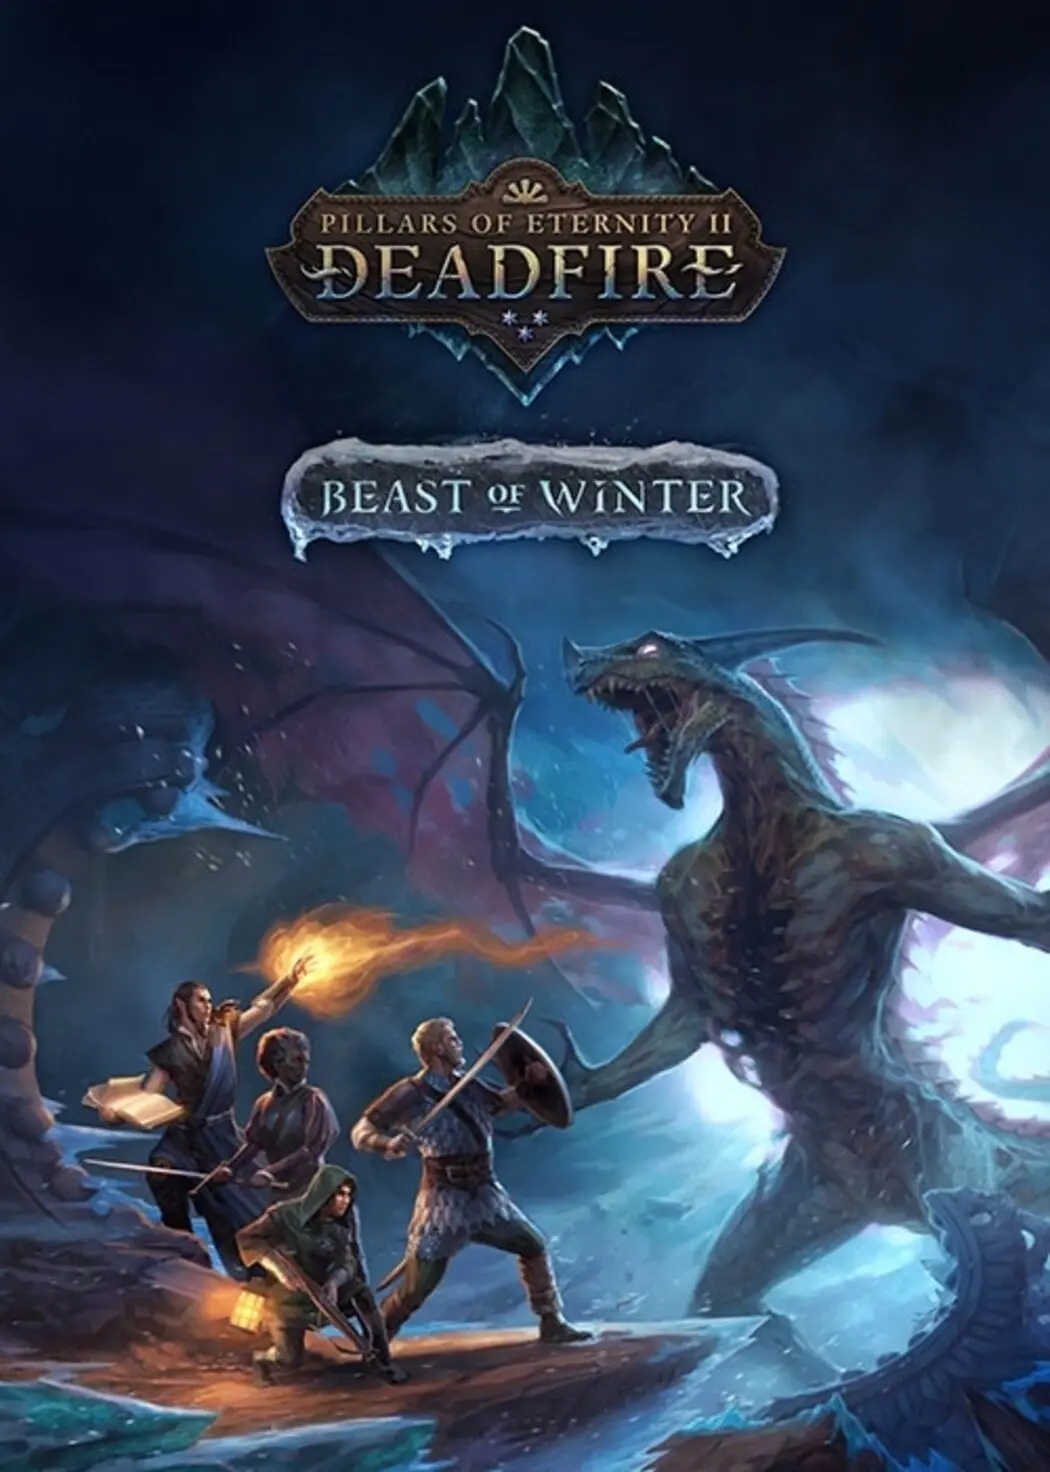 Pillars of Eternity II: Deadfire - Beast of Winter DLC (PC / Mac / Linux) - Steam - Digital Code